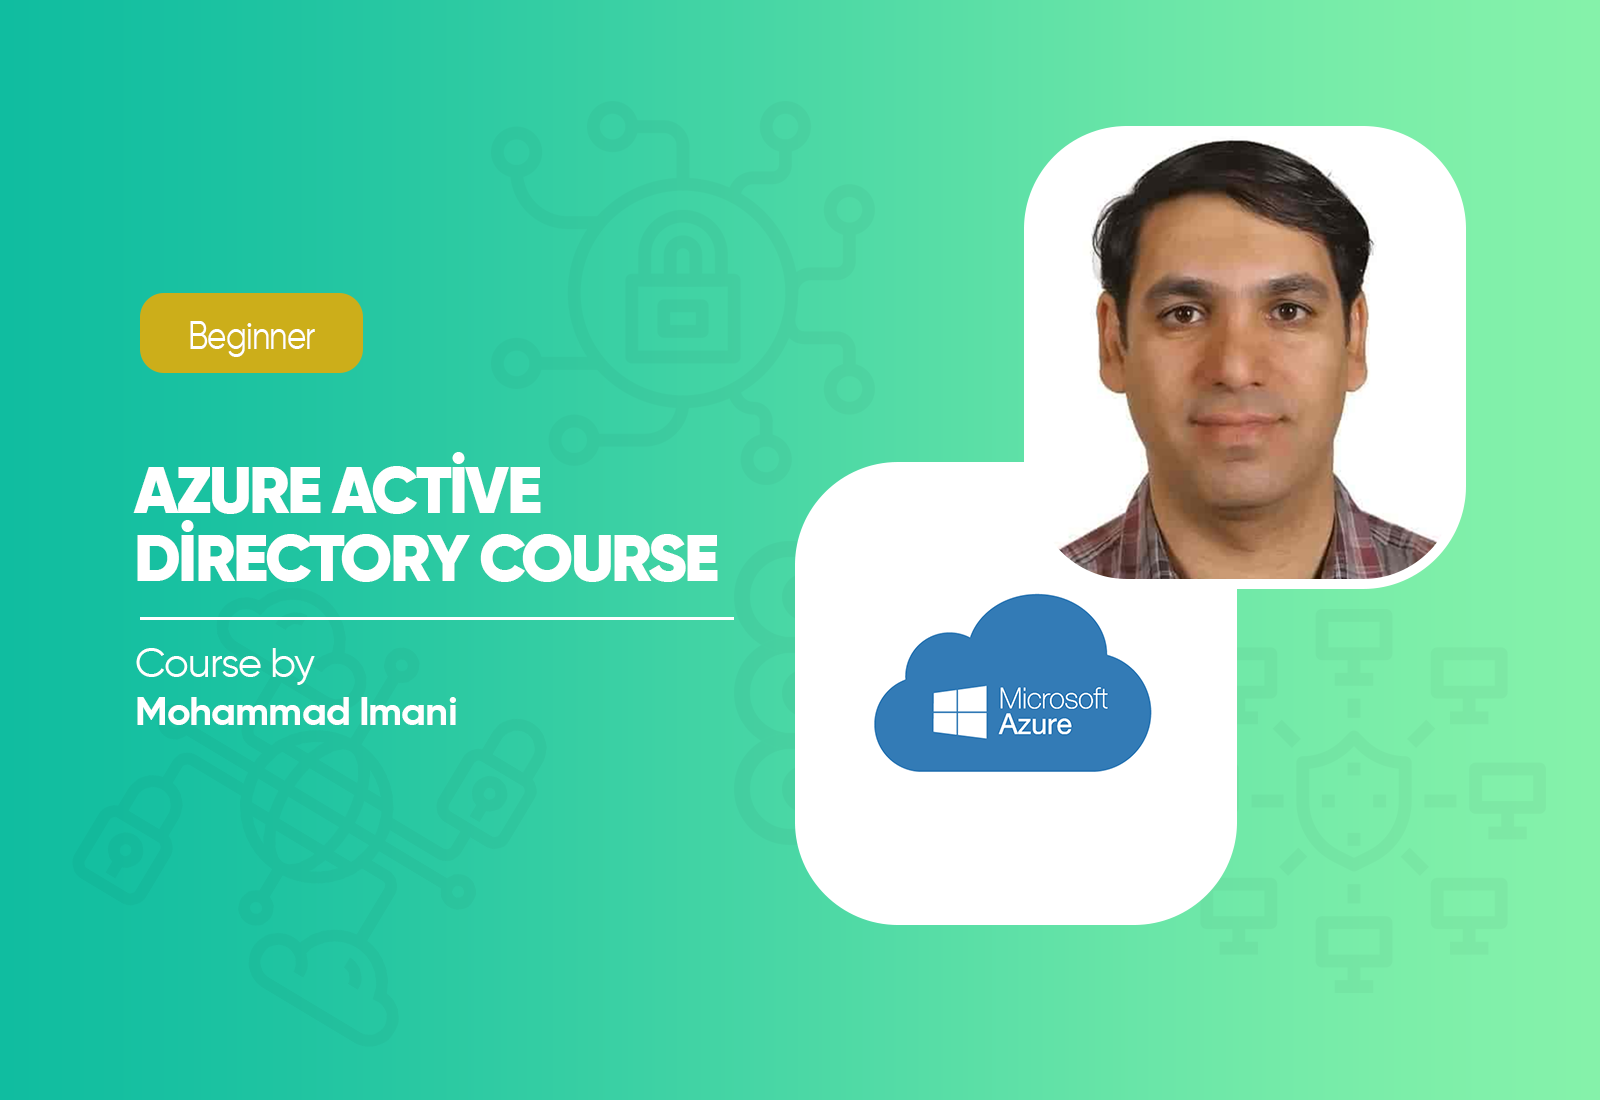 Azure Active Directory Course